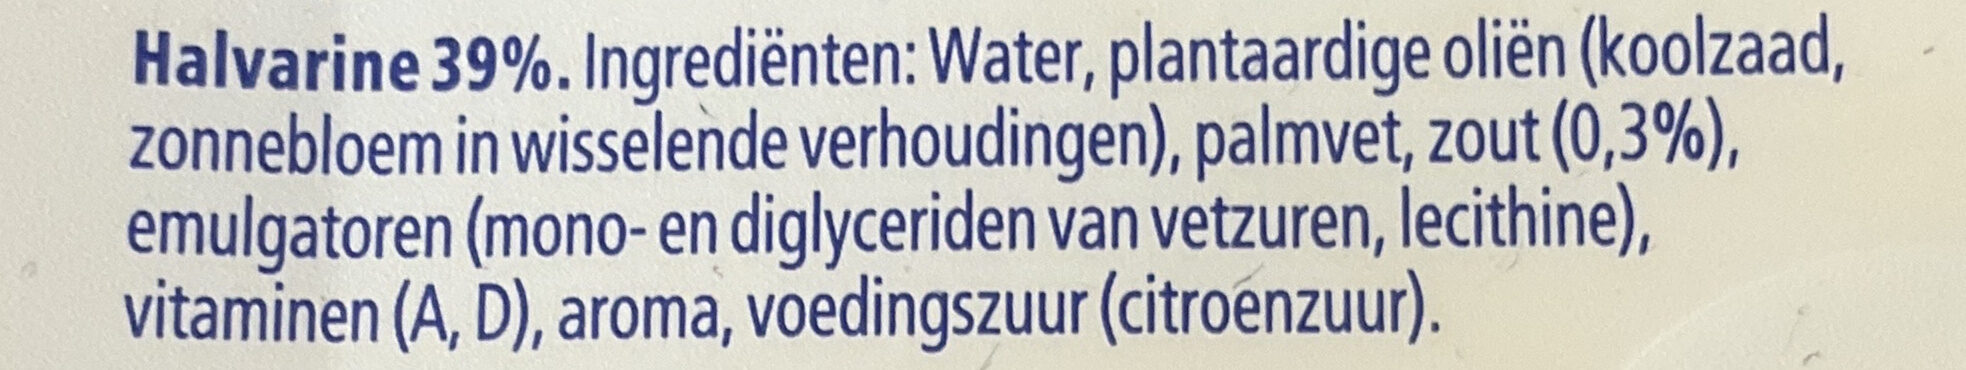 Halvarine halfvol - Ingredients - nl